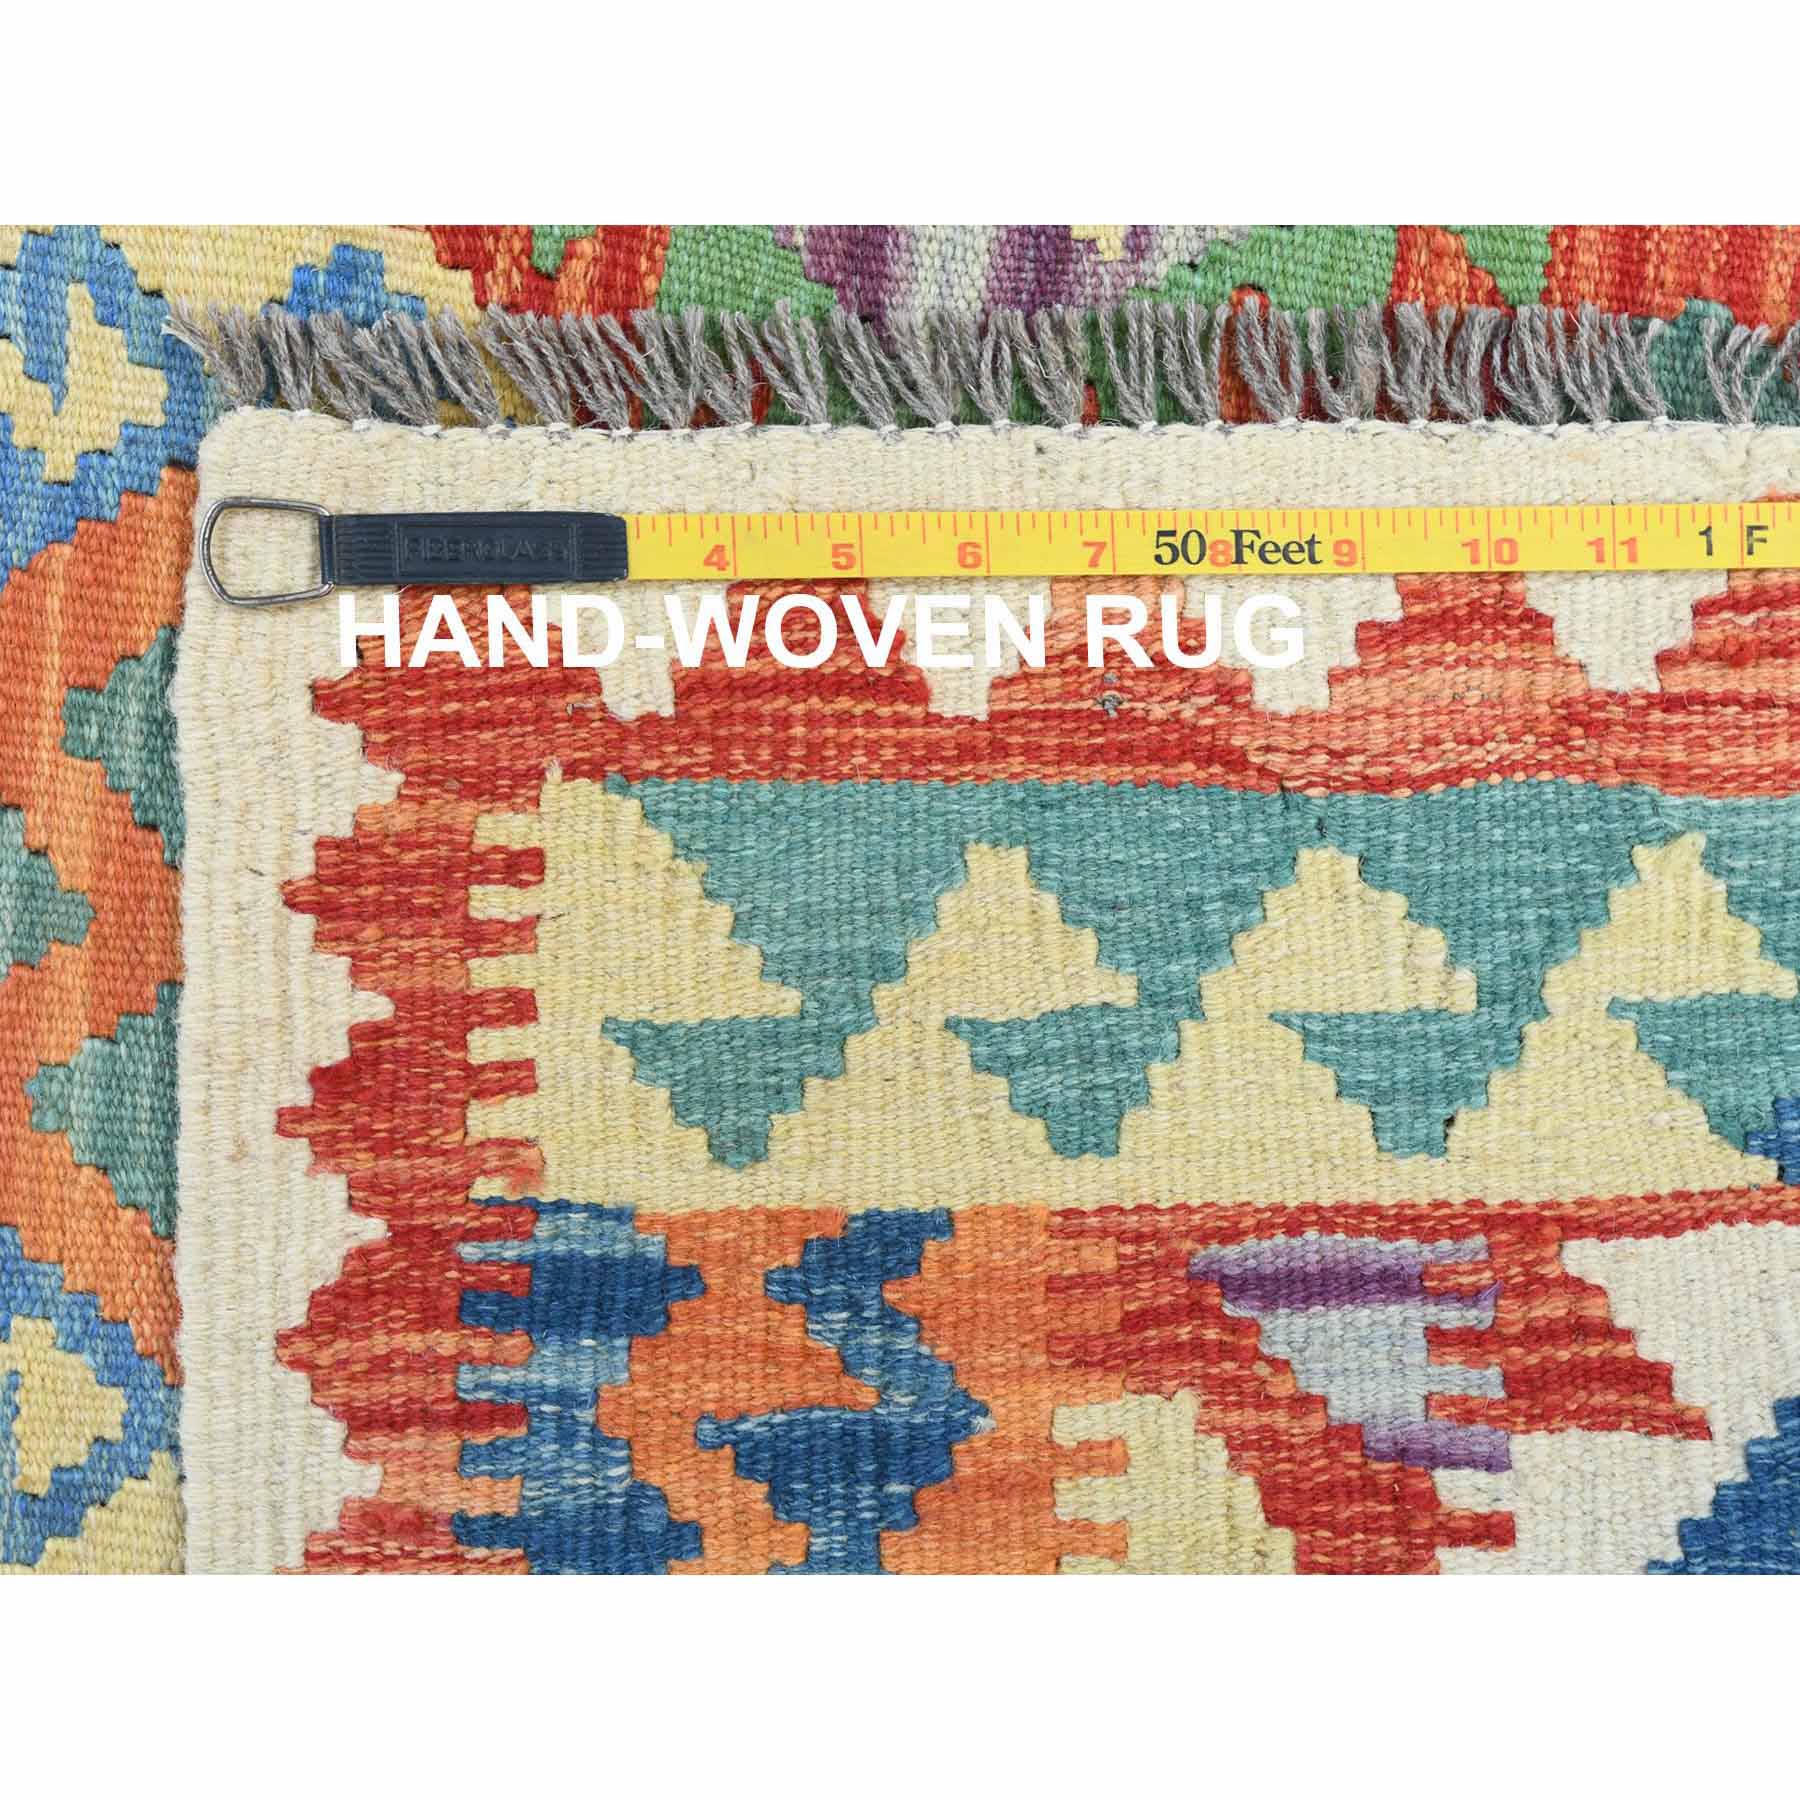 Flat-Weave-Hand-Woven-Rug-406685